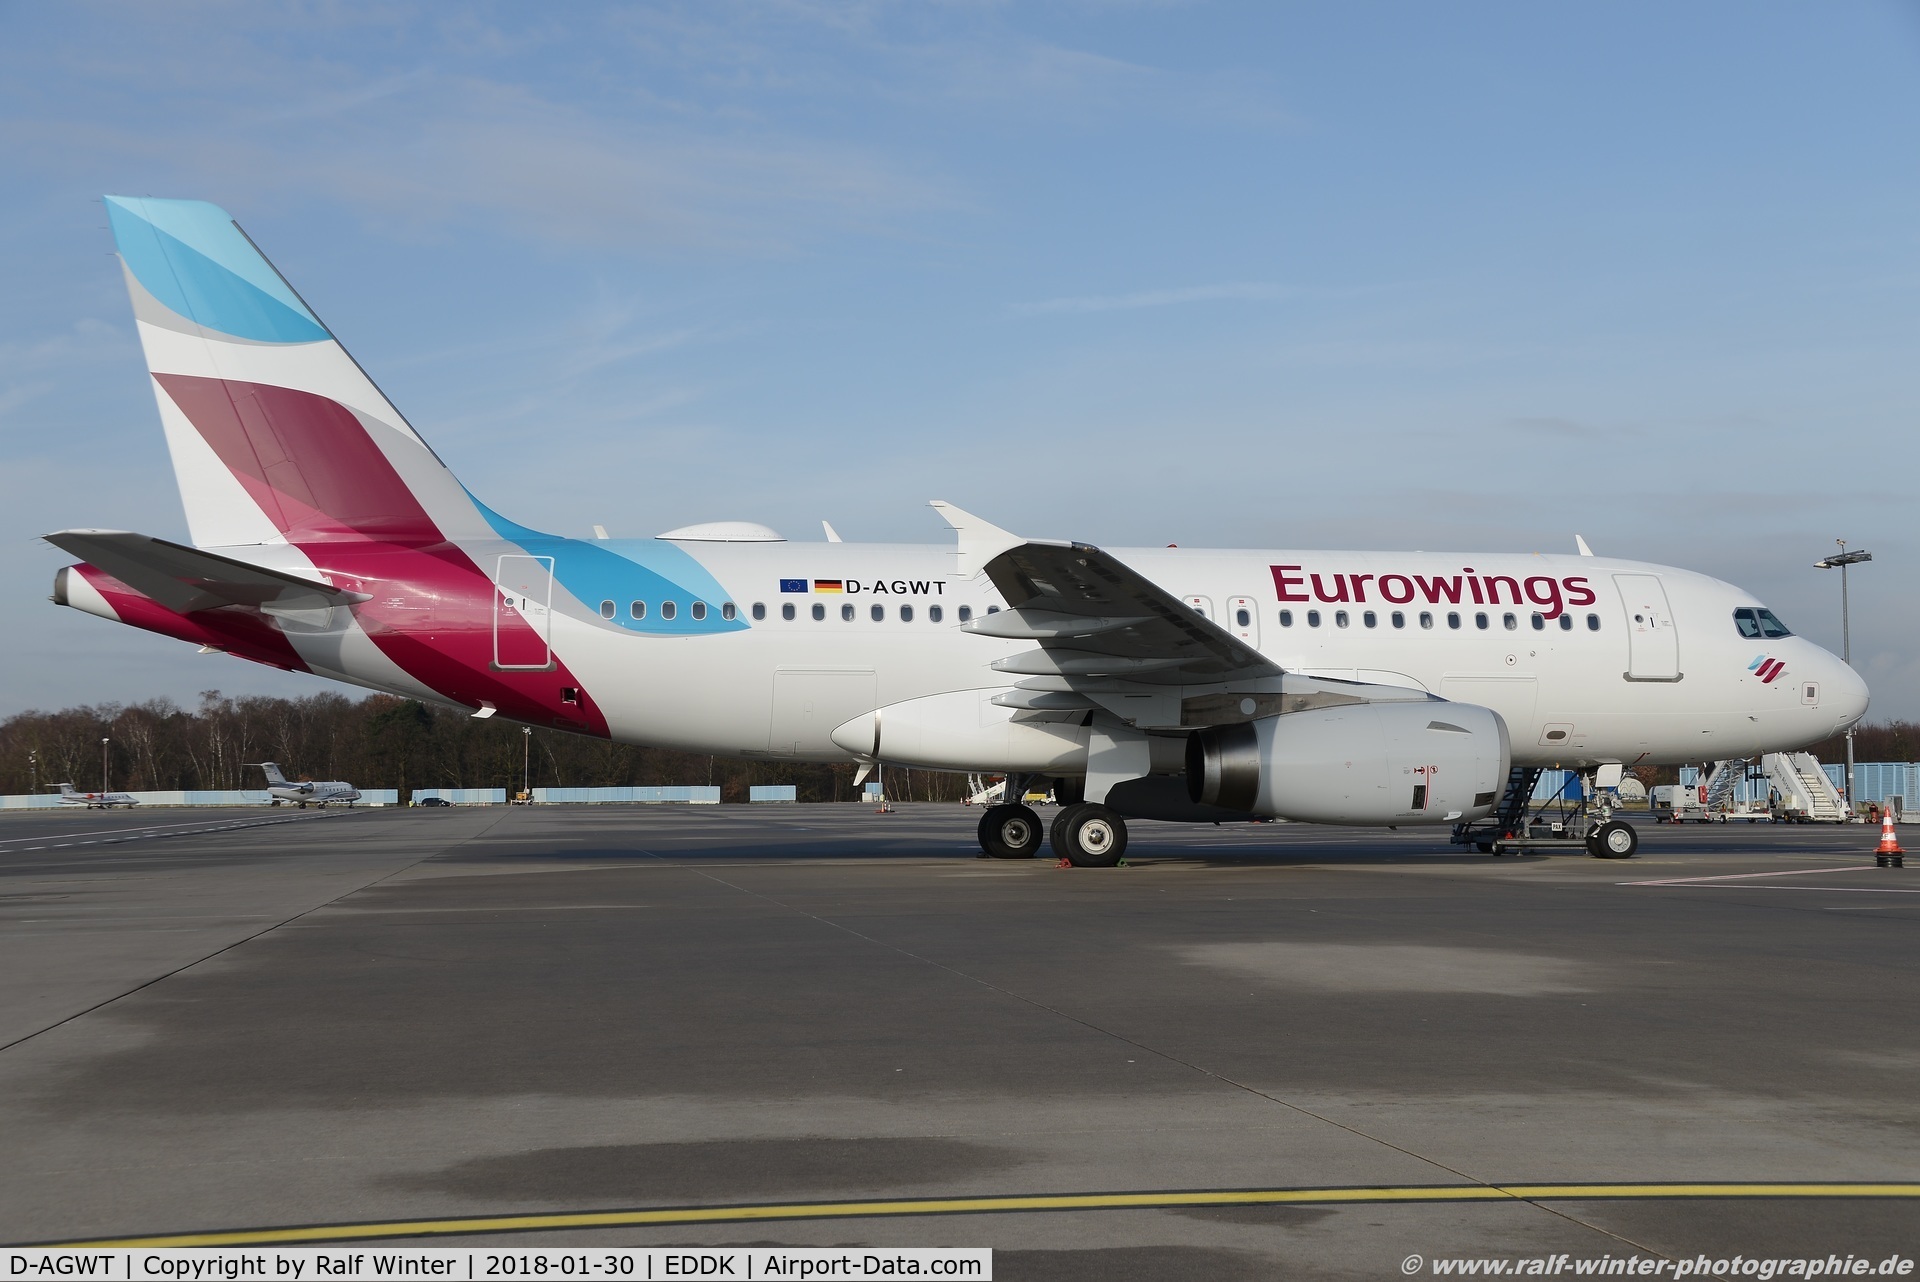 D-AGWT, 2012 Airbus A319-132 C/N 5043, Airbus A319-132 - EW EWG Eurowings ex Germanwings - 5043 - D-AGWT - 30.01.2018 - CGN